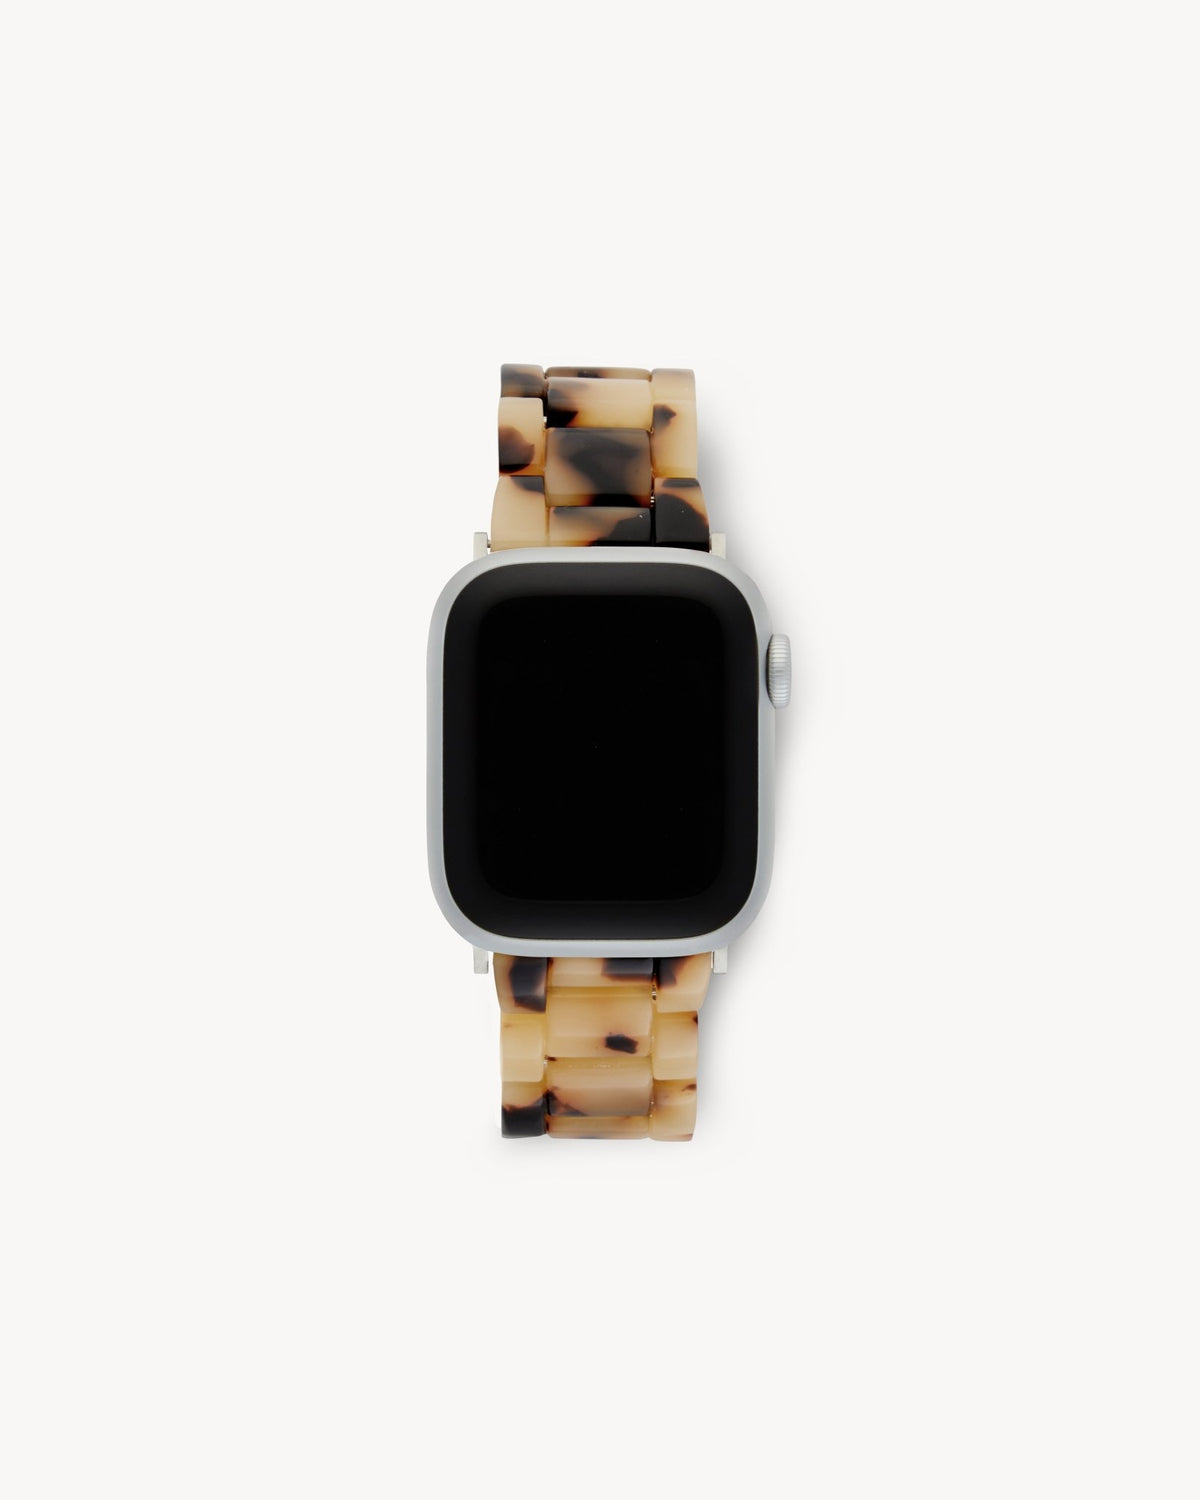 MACHETE Deluxe Apple Watch Band Set in Blonde Tortoise